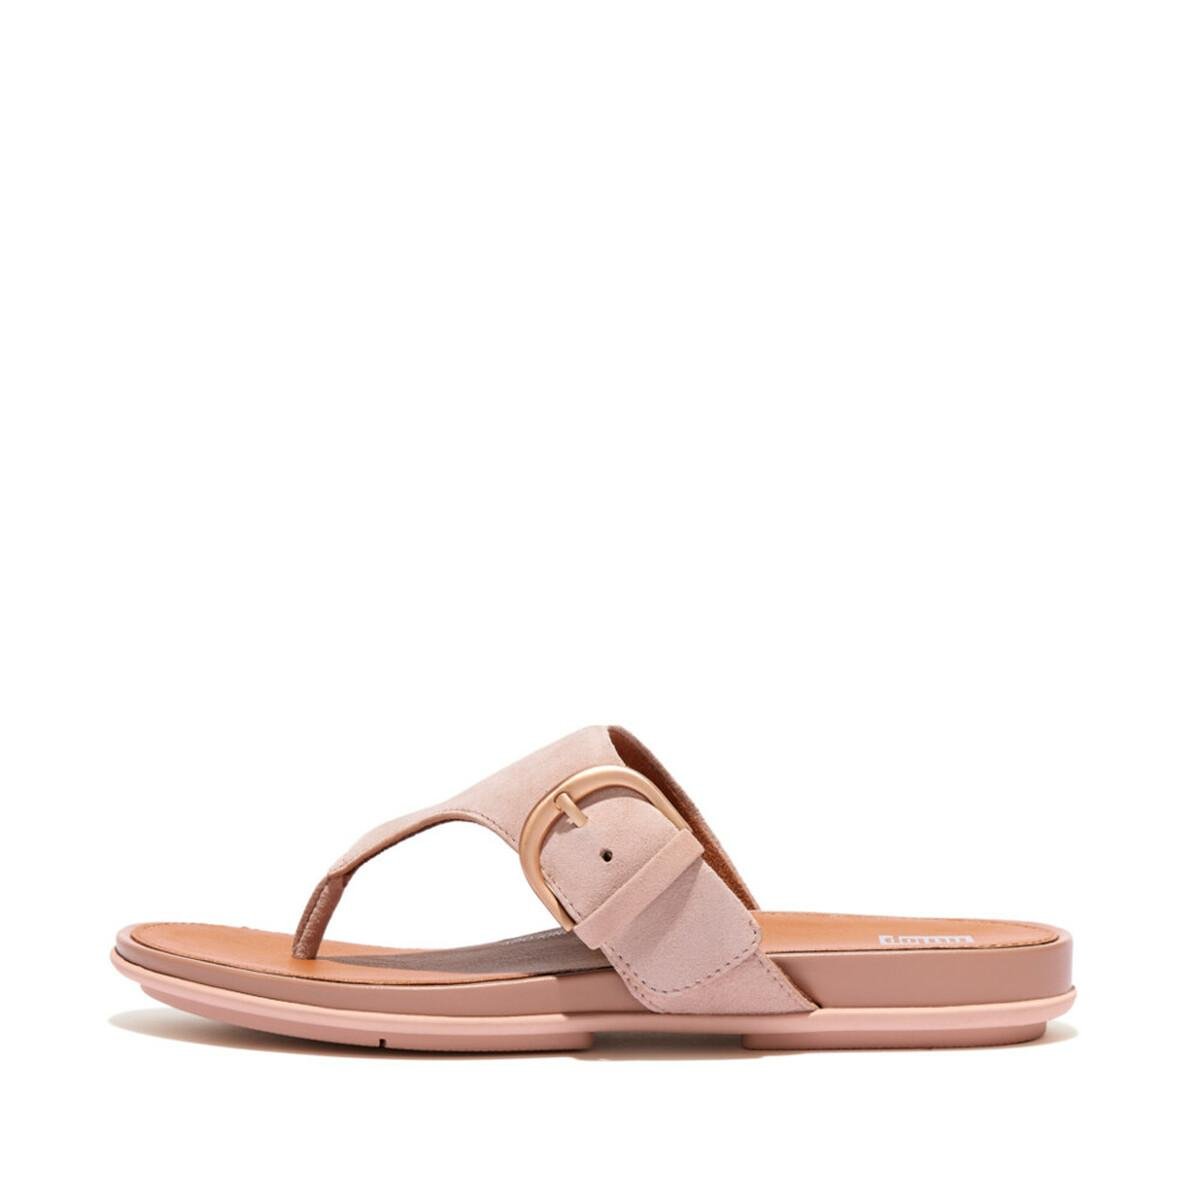 Buy Lulu Shimmerlux Toe-Post Sandals Online | SKU: 228-347-11-3-Metro Shoes